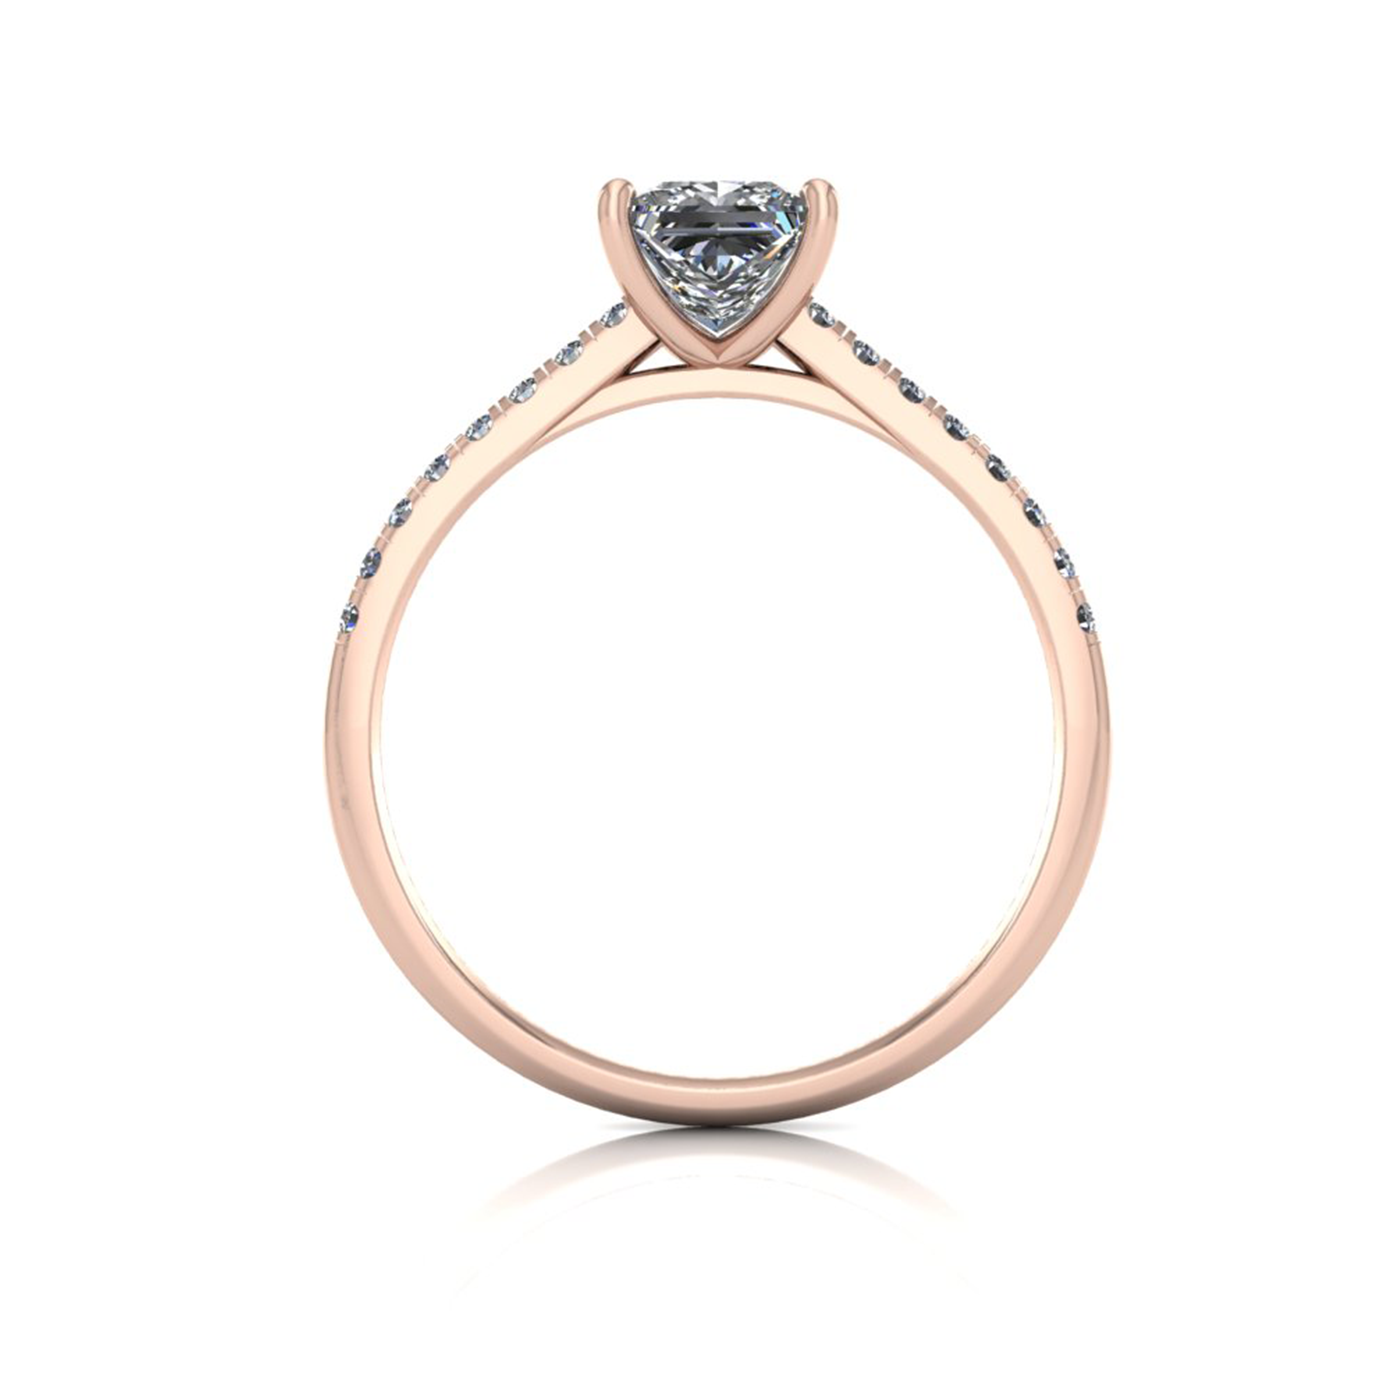 18k rose gold  0,80 ct 4 prongs princess cut diamond engagement ring with whisper thin pavÉ set band